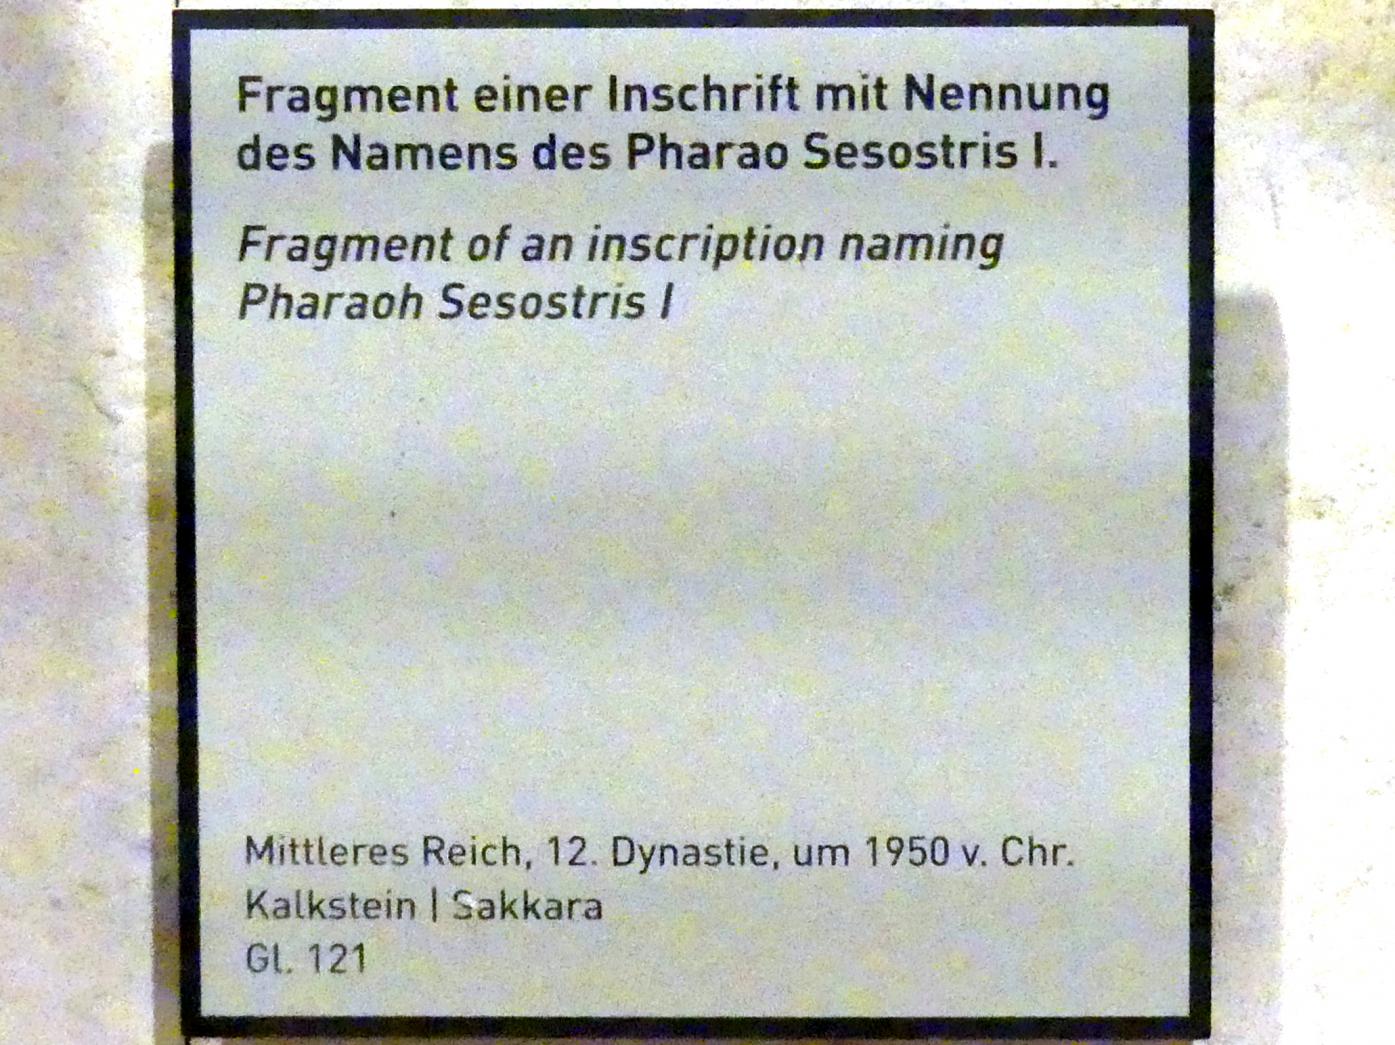 Fragment einer Inschrift mit Nennung des Namens des Pharao Sesostris I., 12. Dynastie, 1678 - 1634 v. Chr., 1950 v. Chr., Bild 2/2